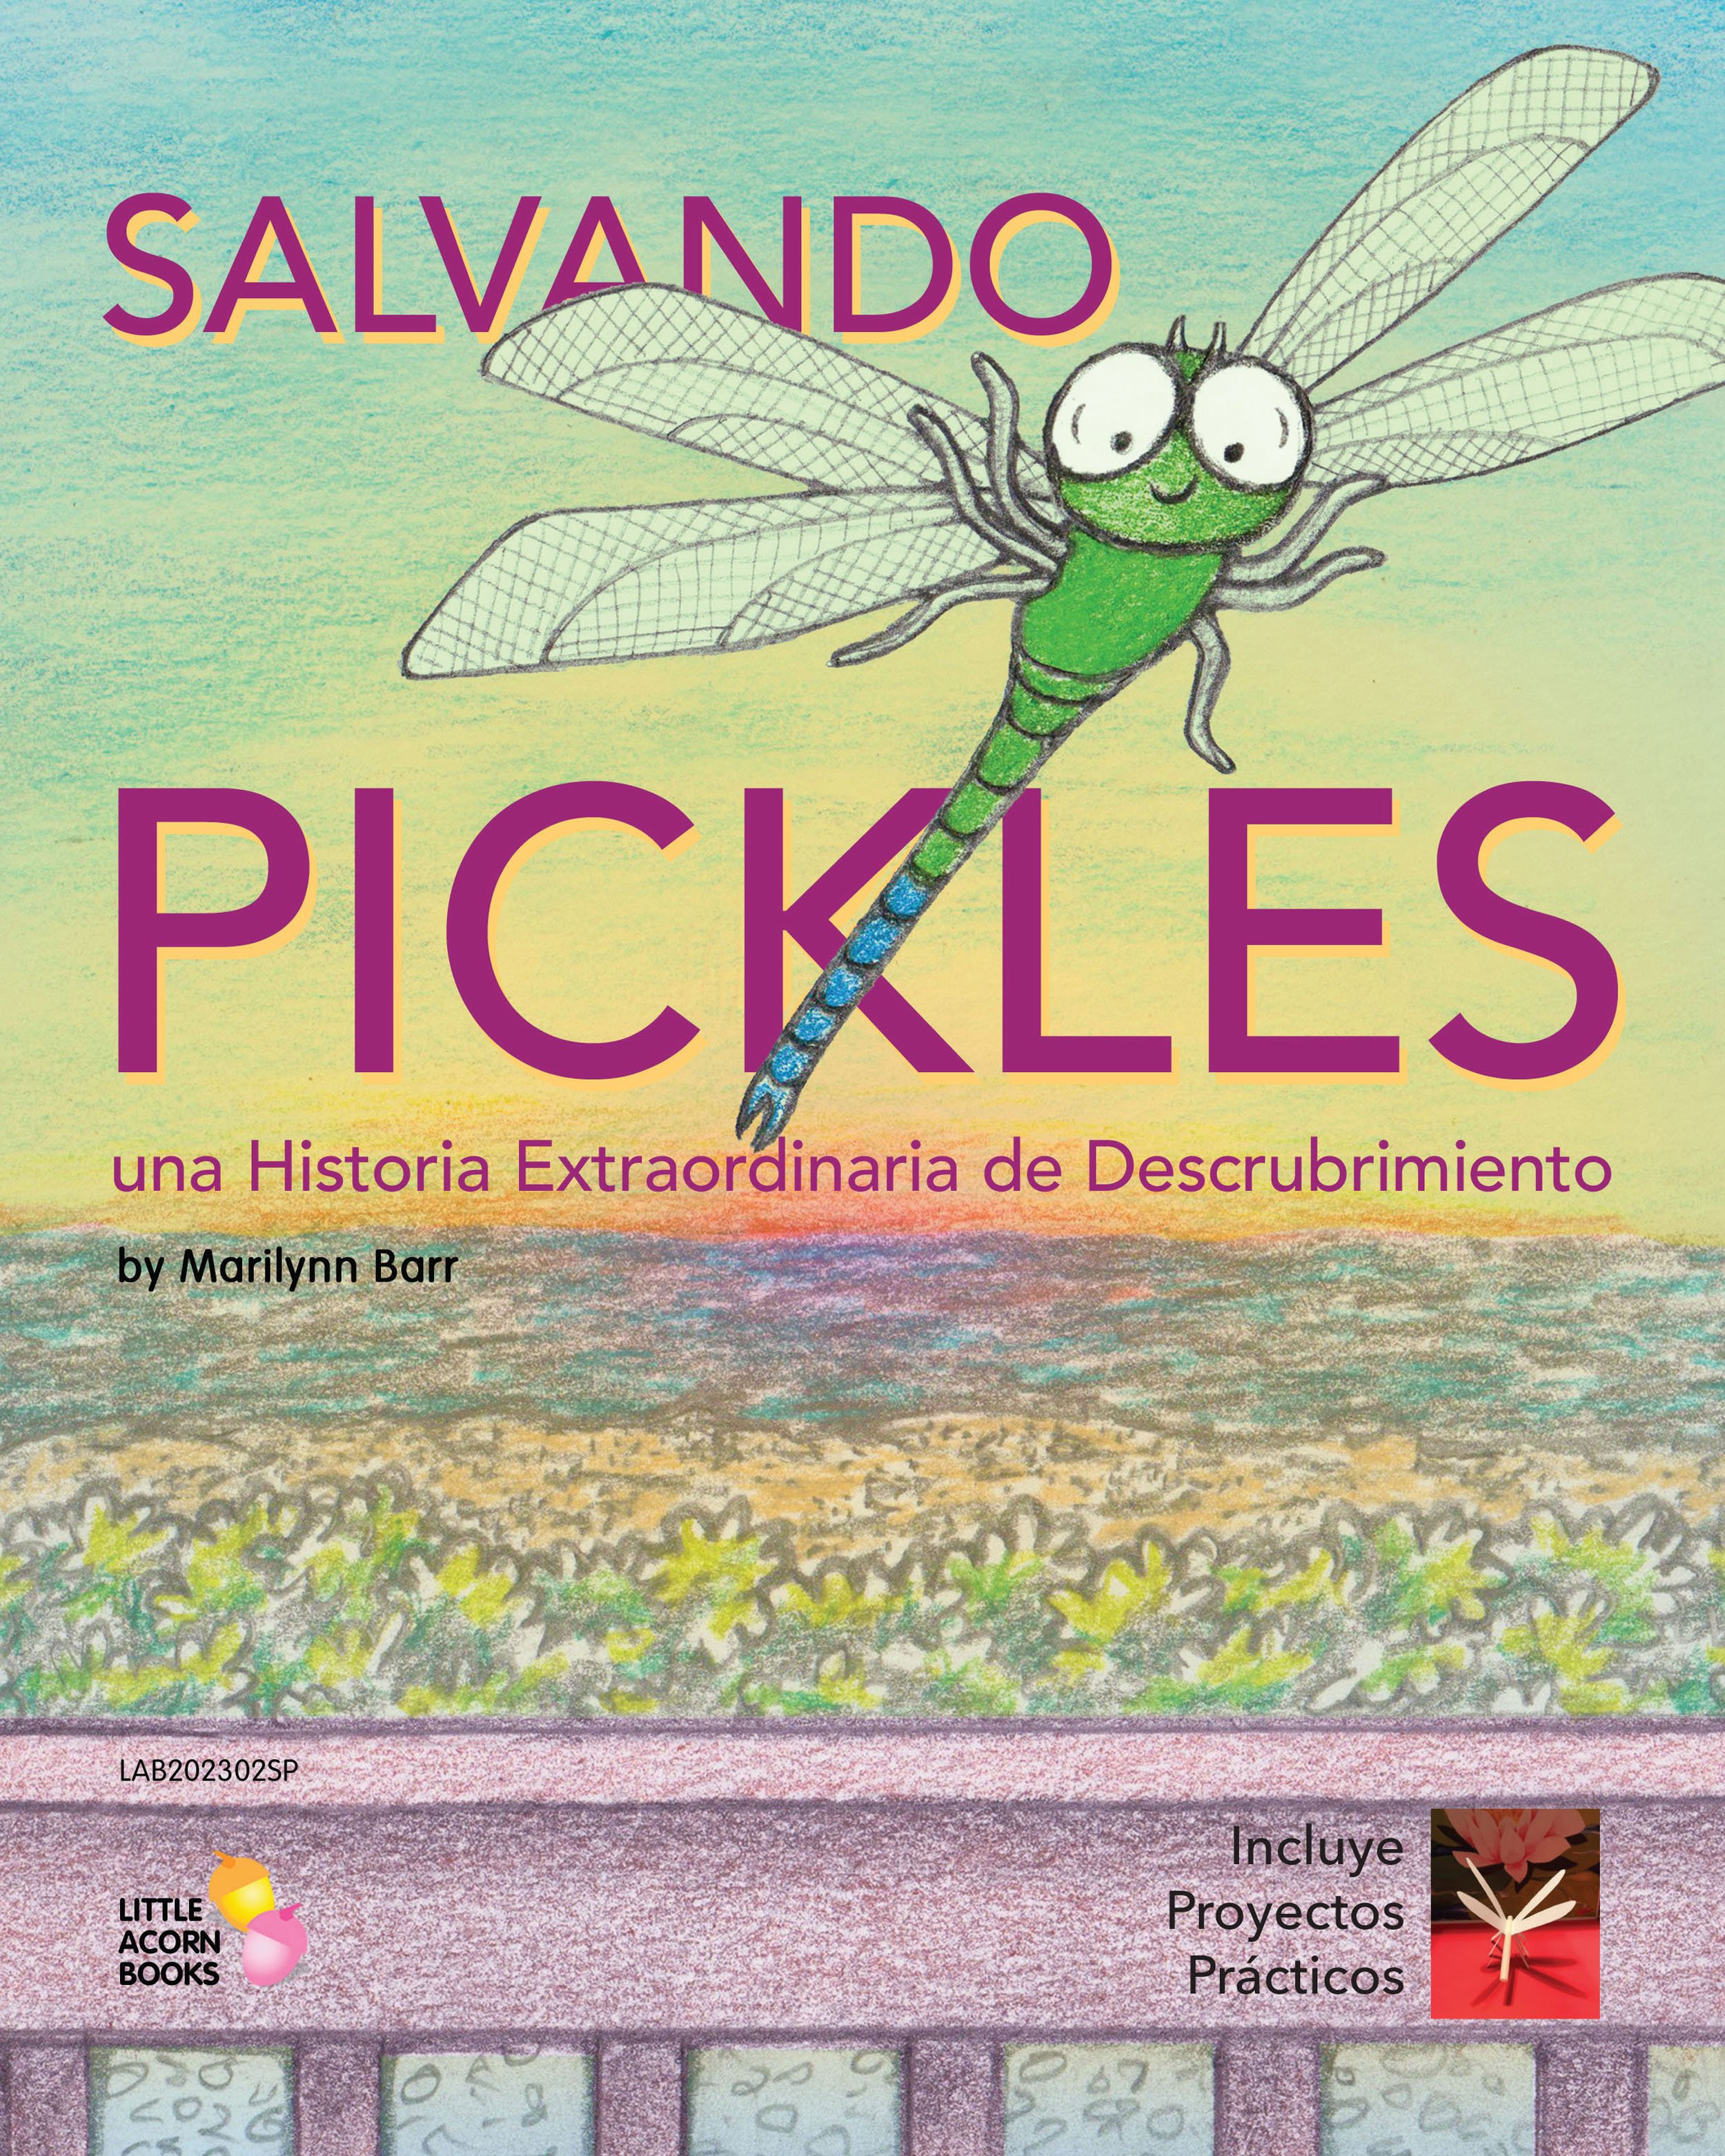 NEW! Salvando Pickles